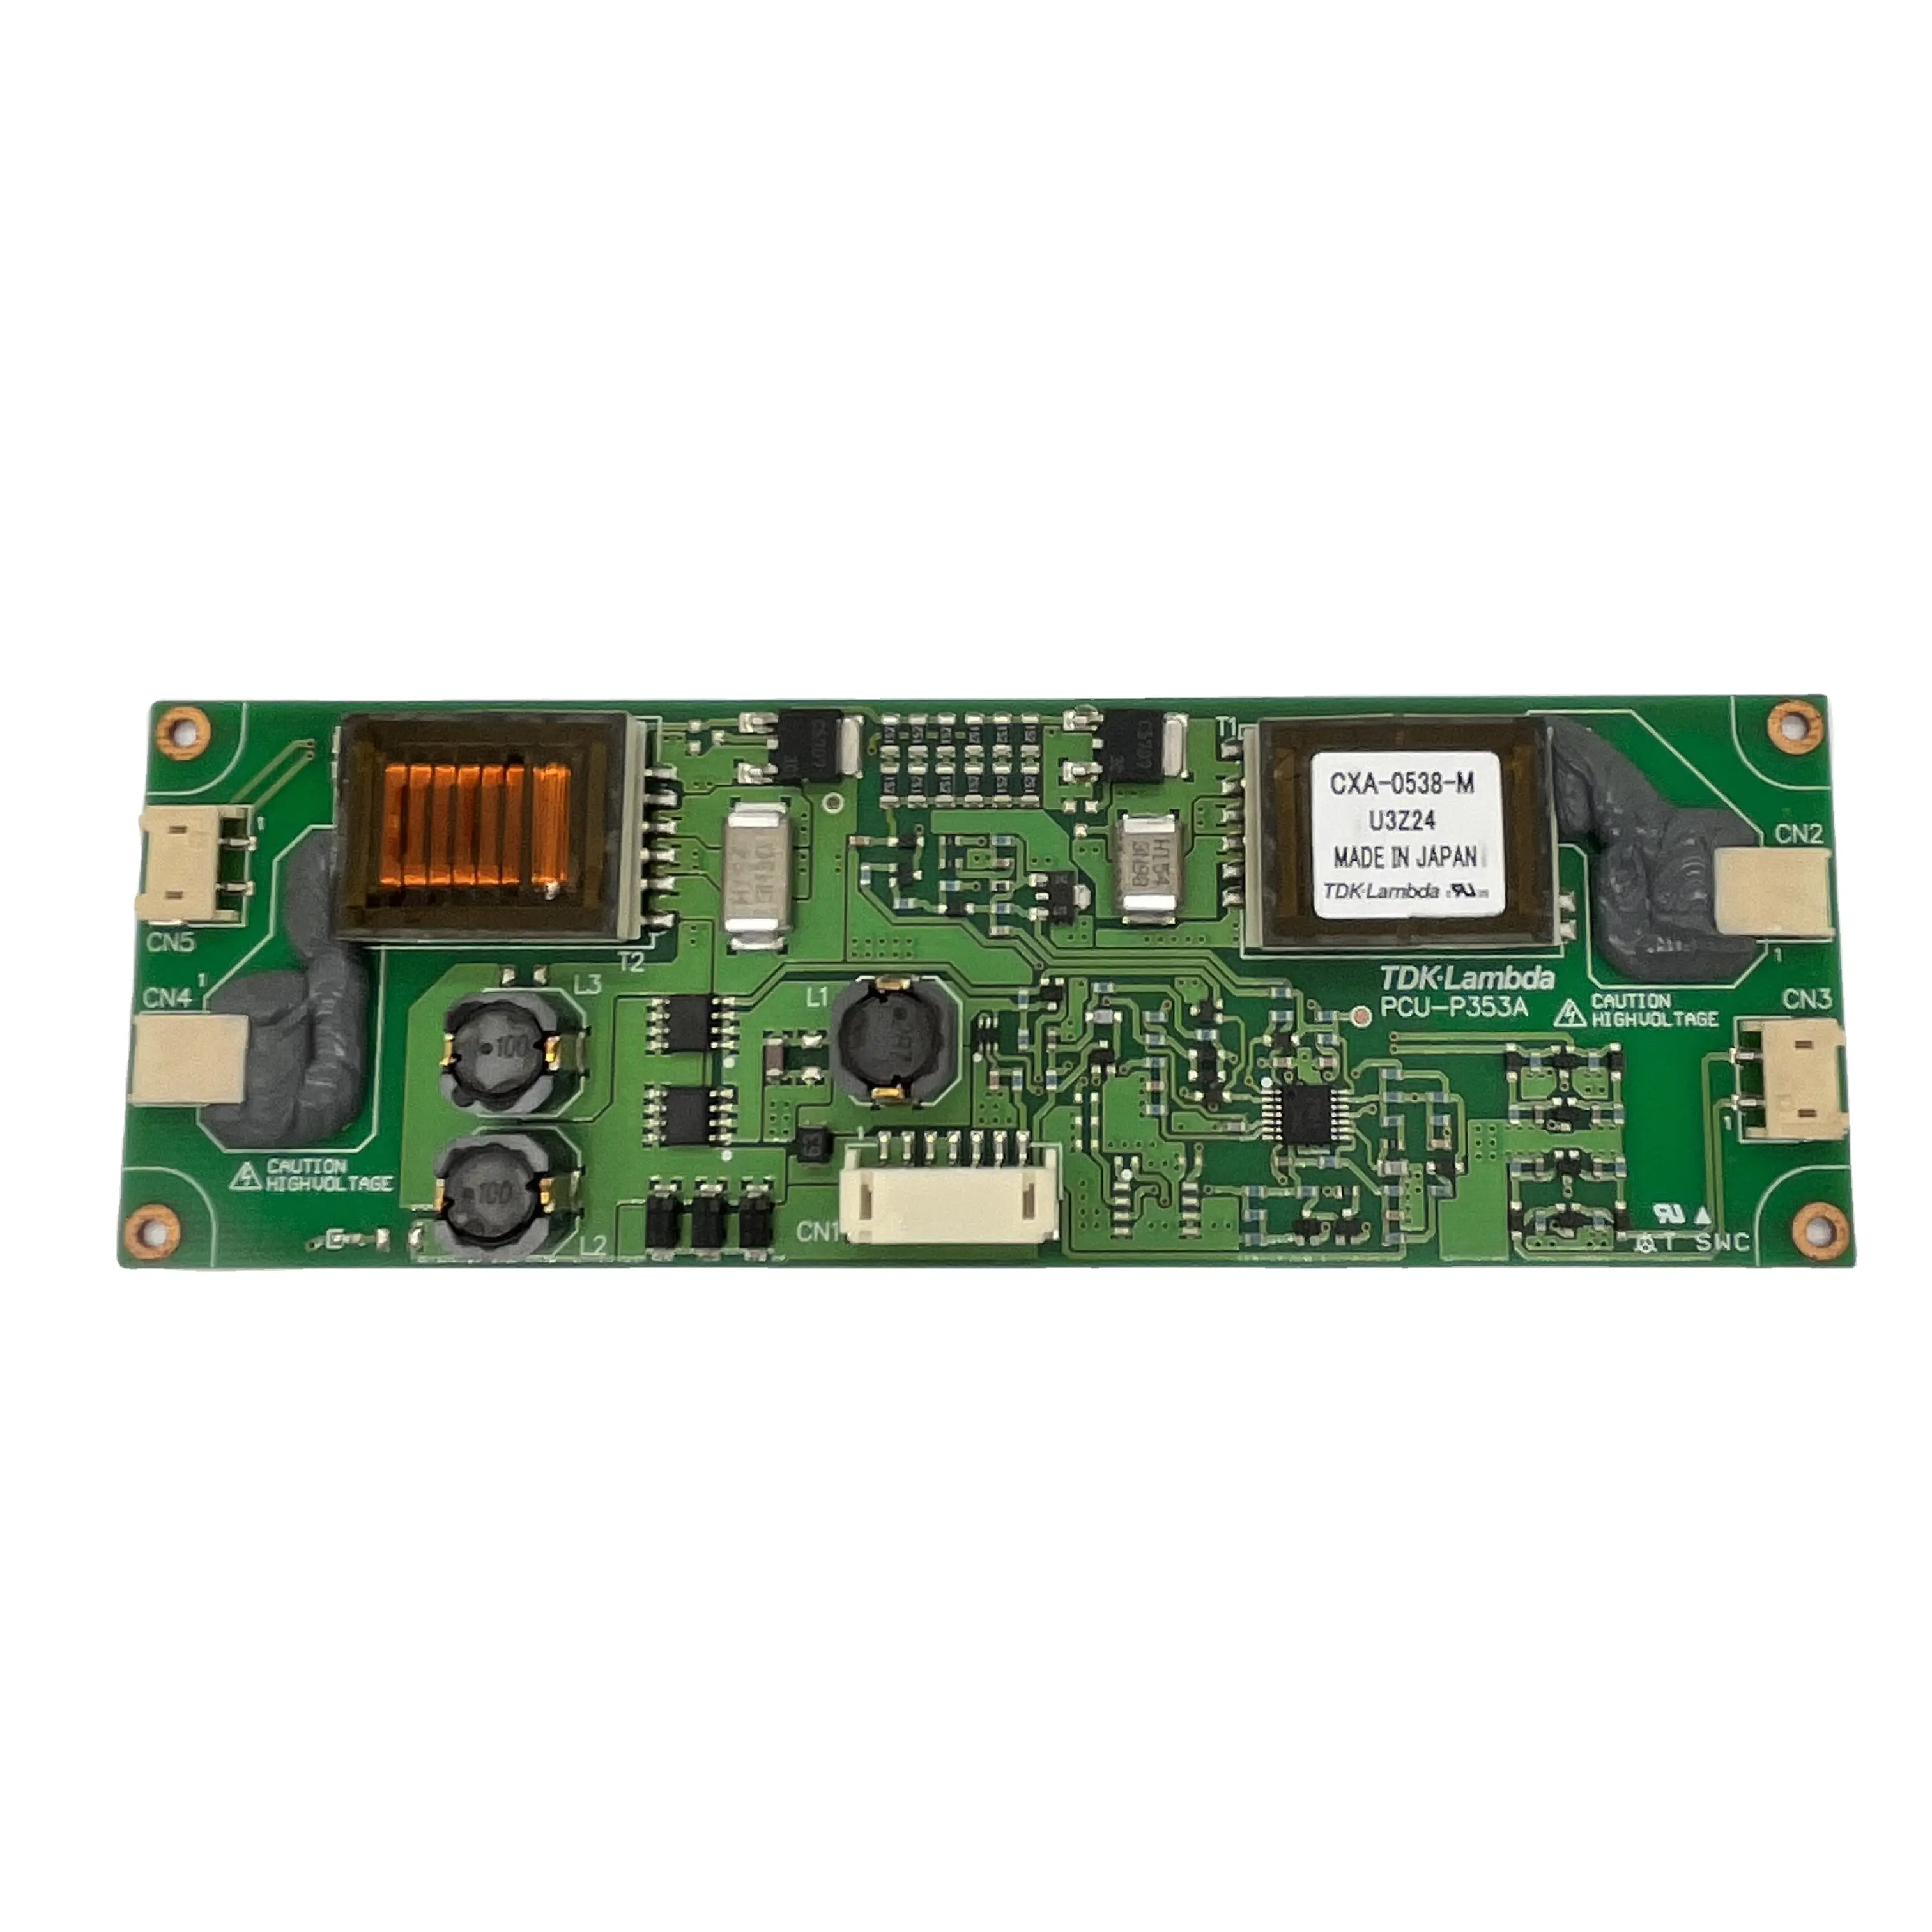 Original Plc Lcd Display Inverter Board CXA-0538-M